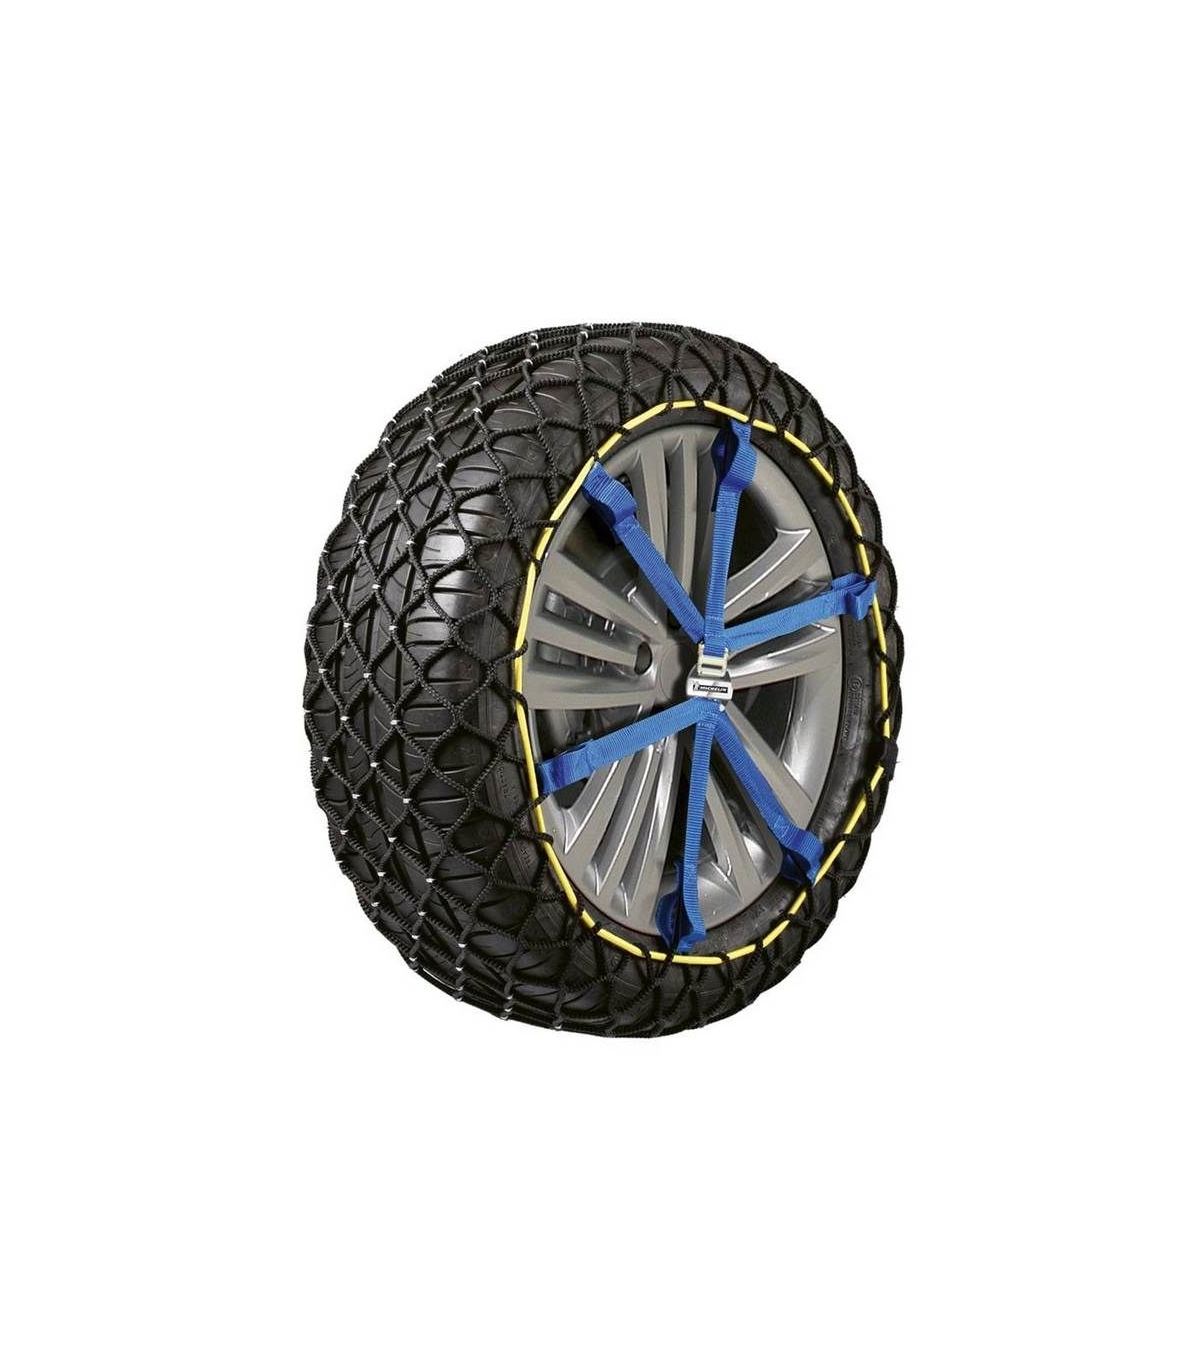 Chaine neige Michelin chaussette EasyGrip Evo - 205 / 55 R 17 -  3665597888560 - Cdiscount Auto